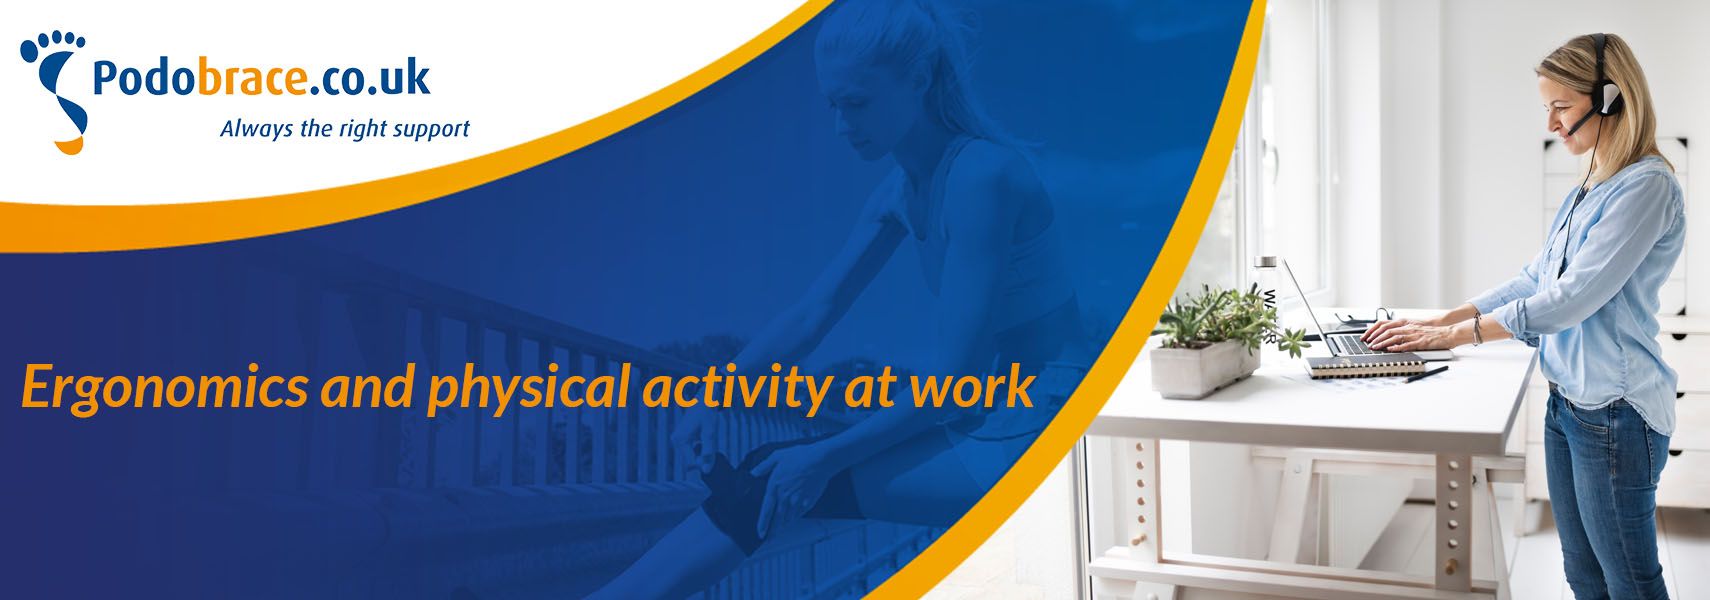 ergonomics and physical activity at work